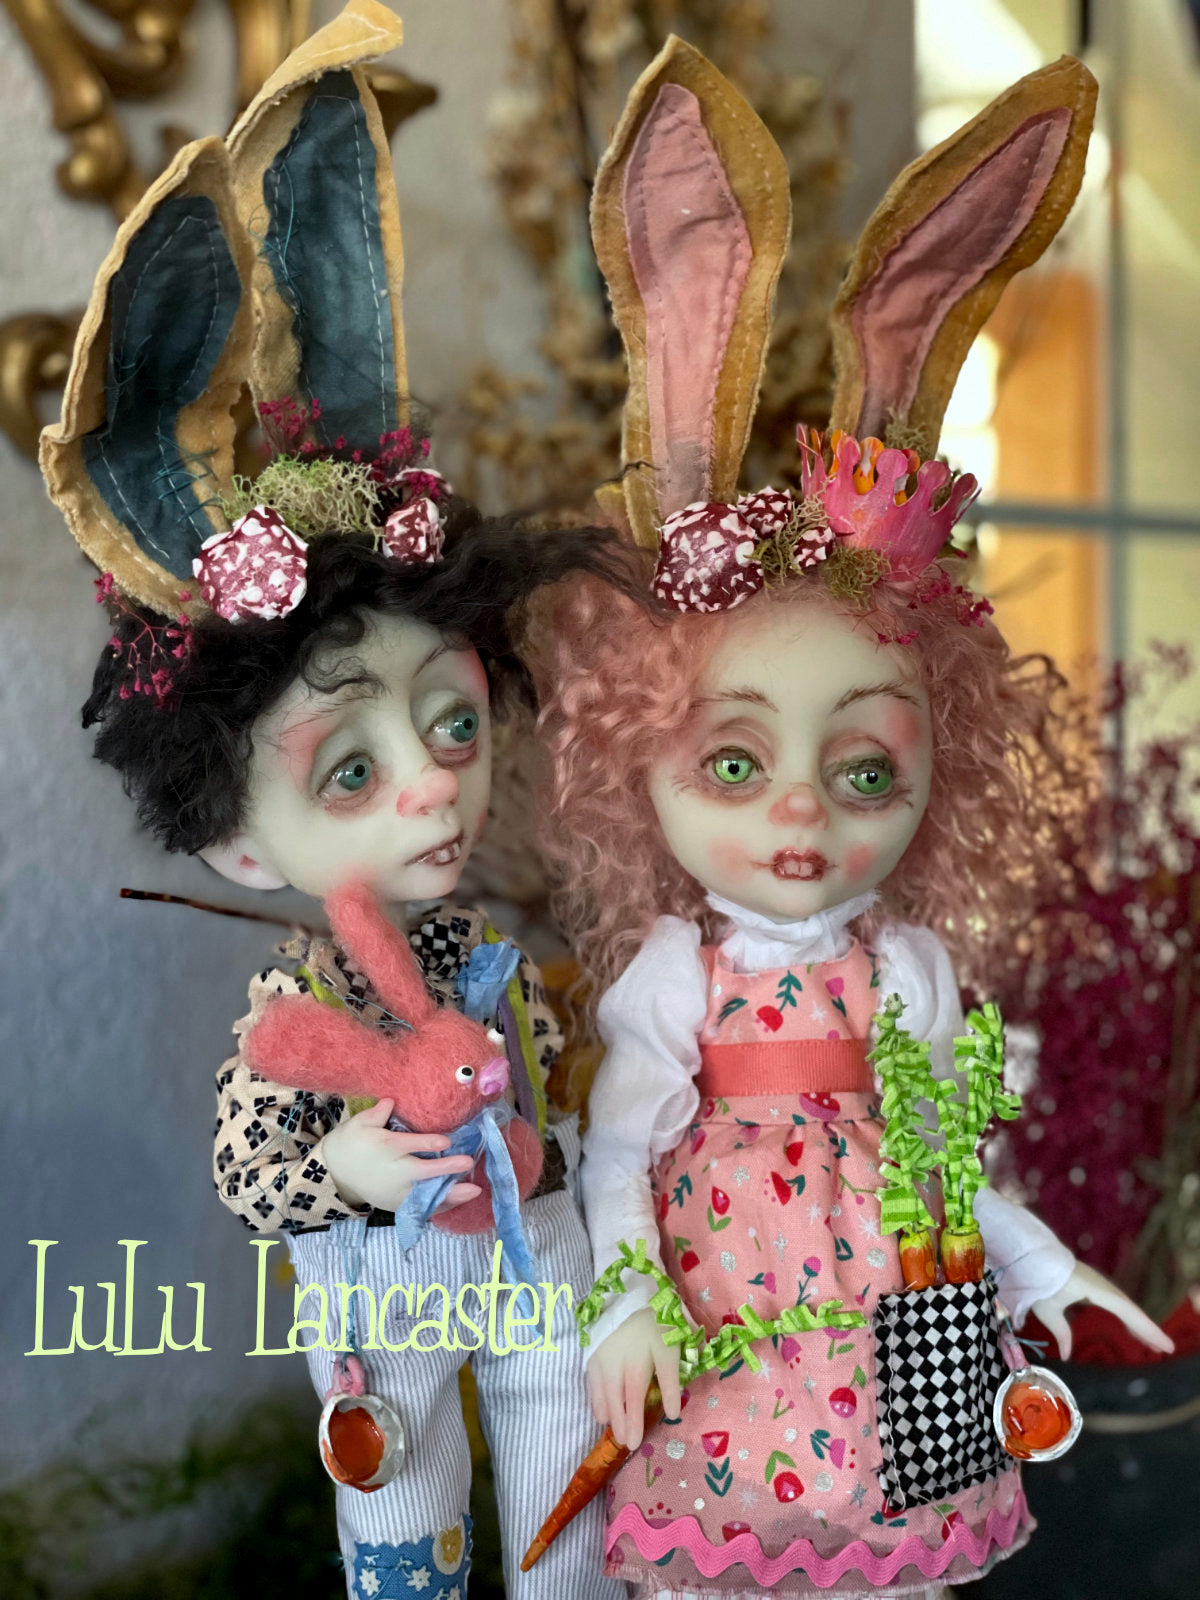 Danvers and Chantenay Rabbits Original LuLu Lancaster Art Doll